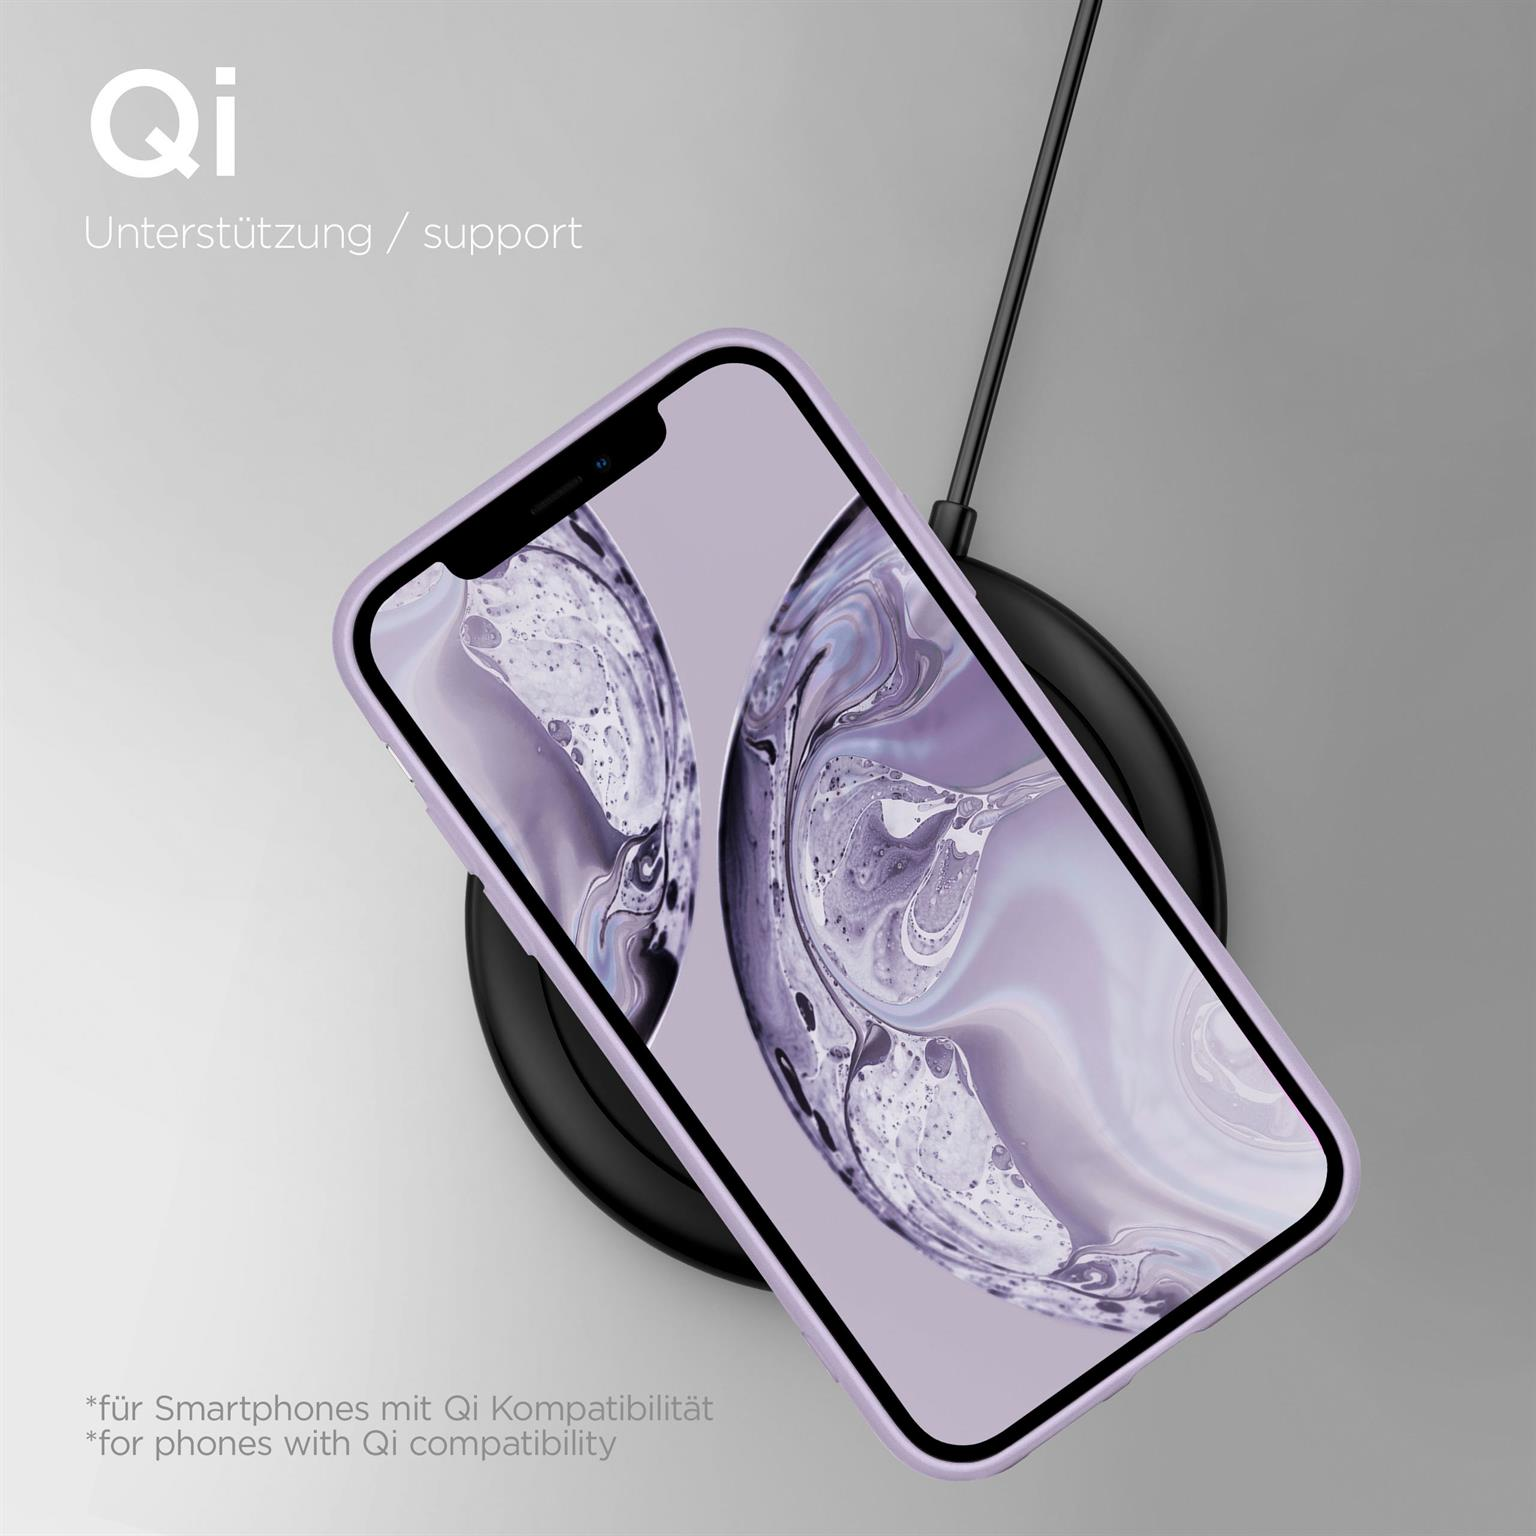 ONEFLOW Soft Case, iPhone 12, Apple, Flieder Backcover